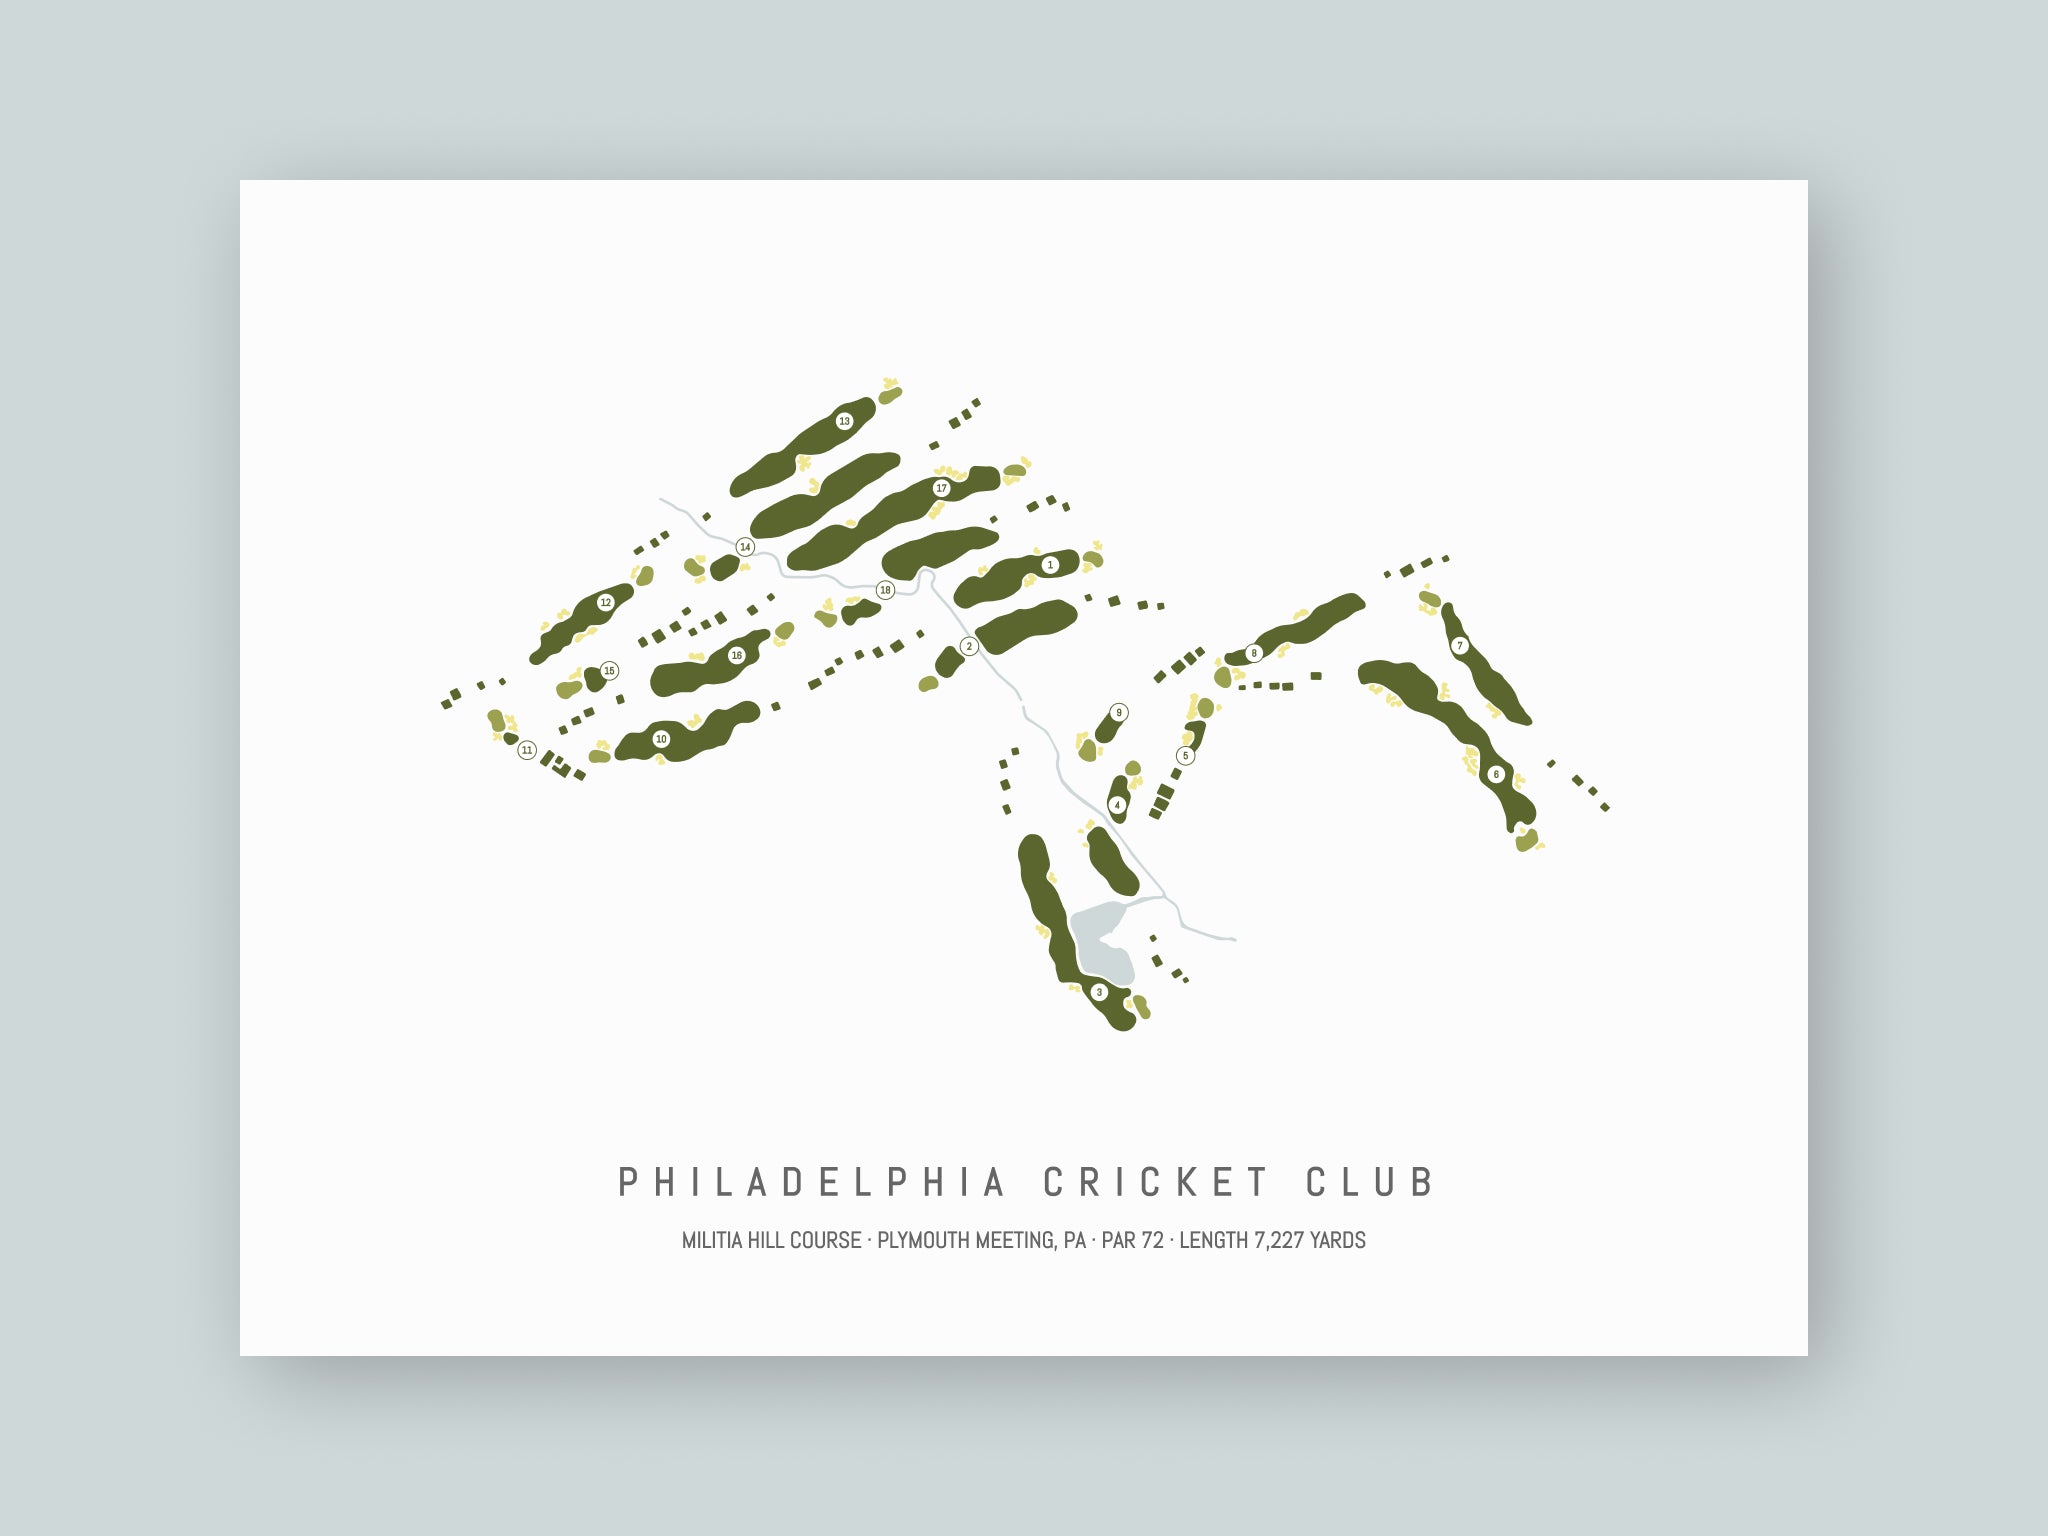 Philadelphia Cricket Club - Militia Hill Course